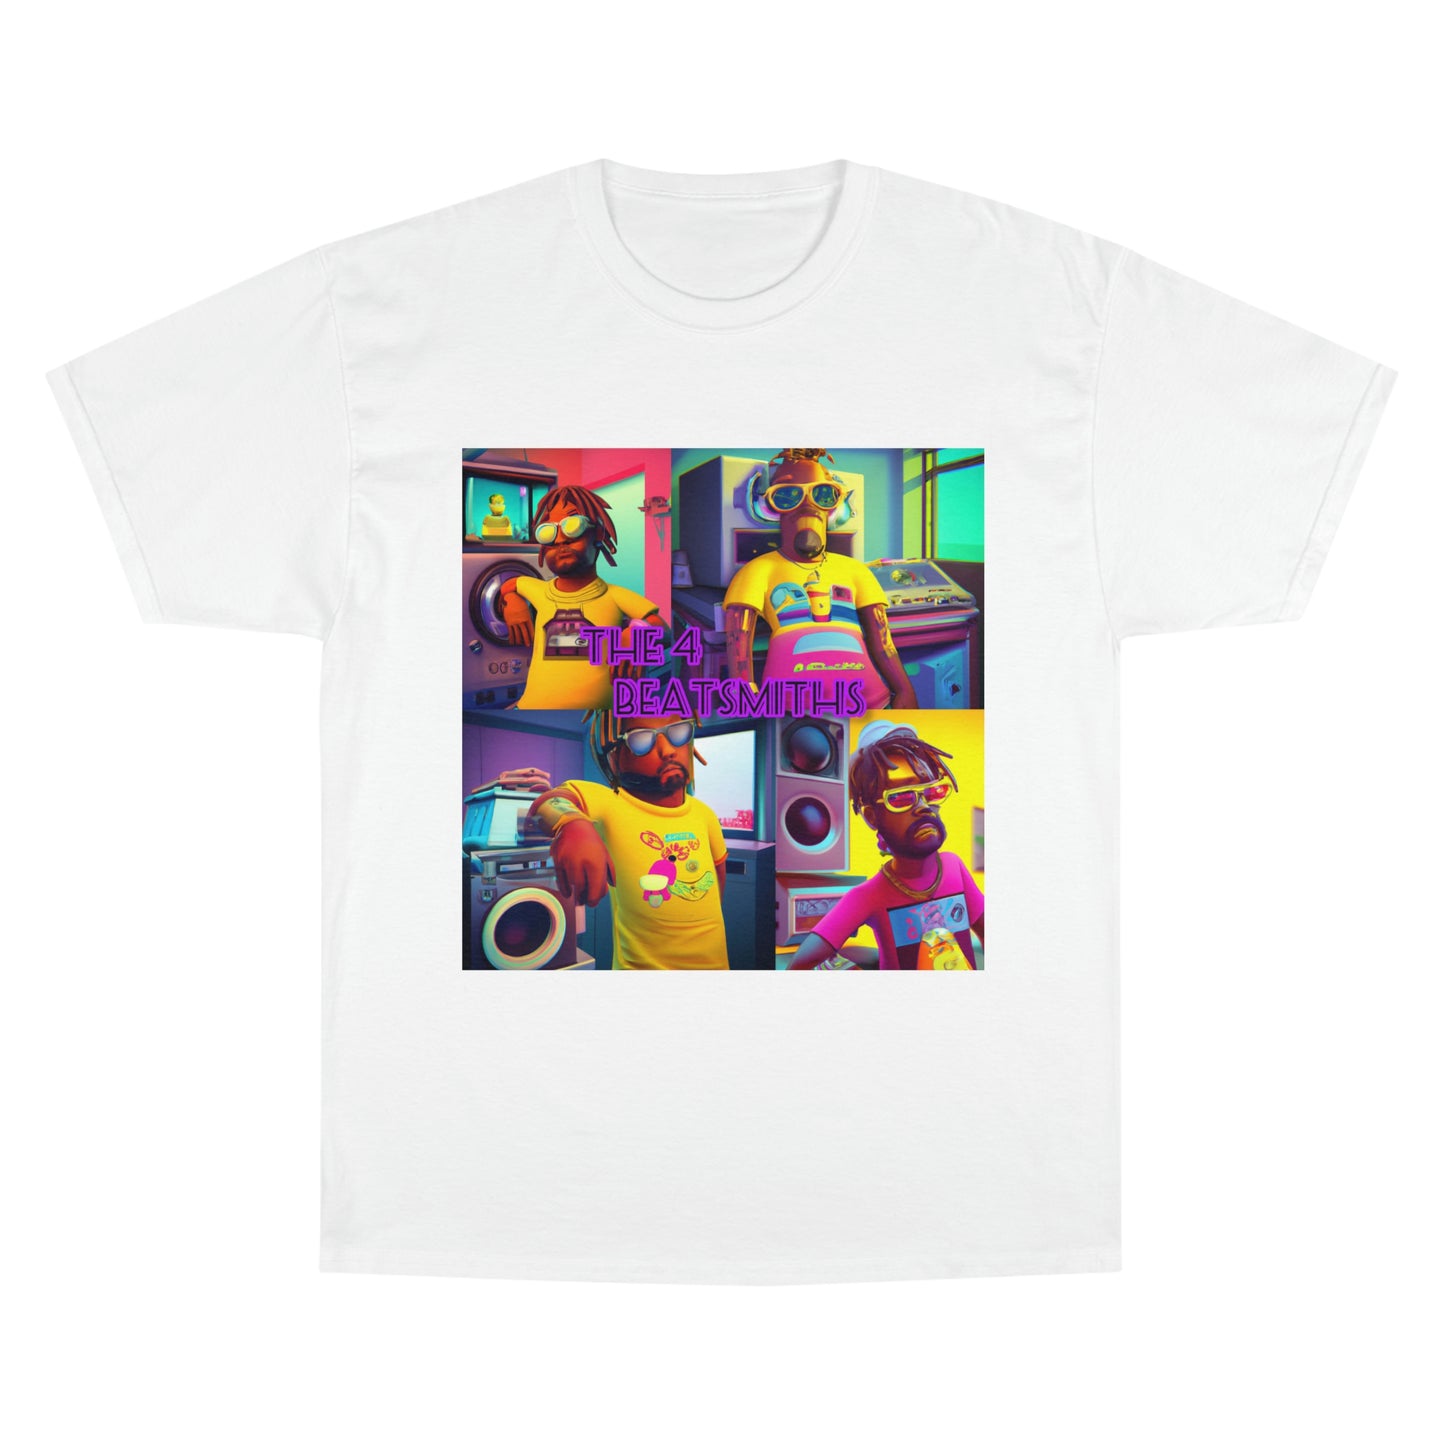 Atziluth Gallery x Champion "The 4 Beatsmiths"  T-Shirt